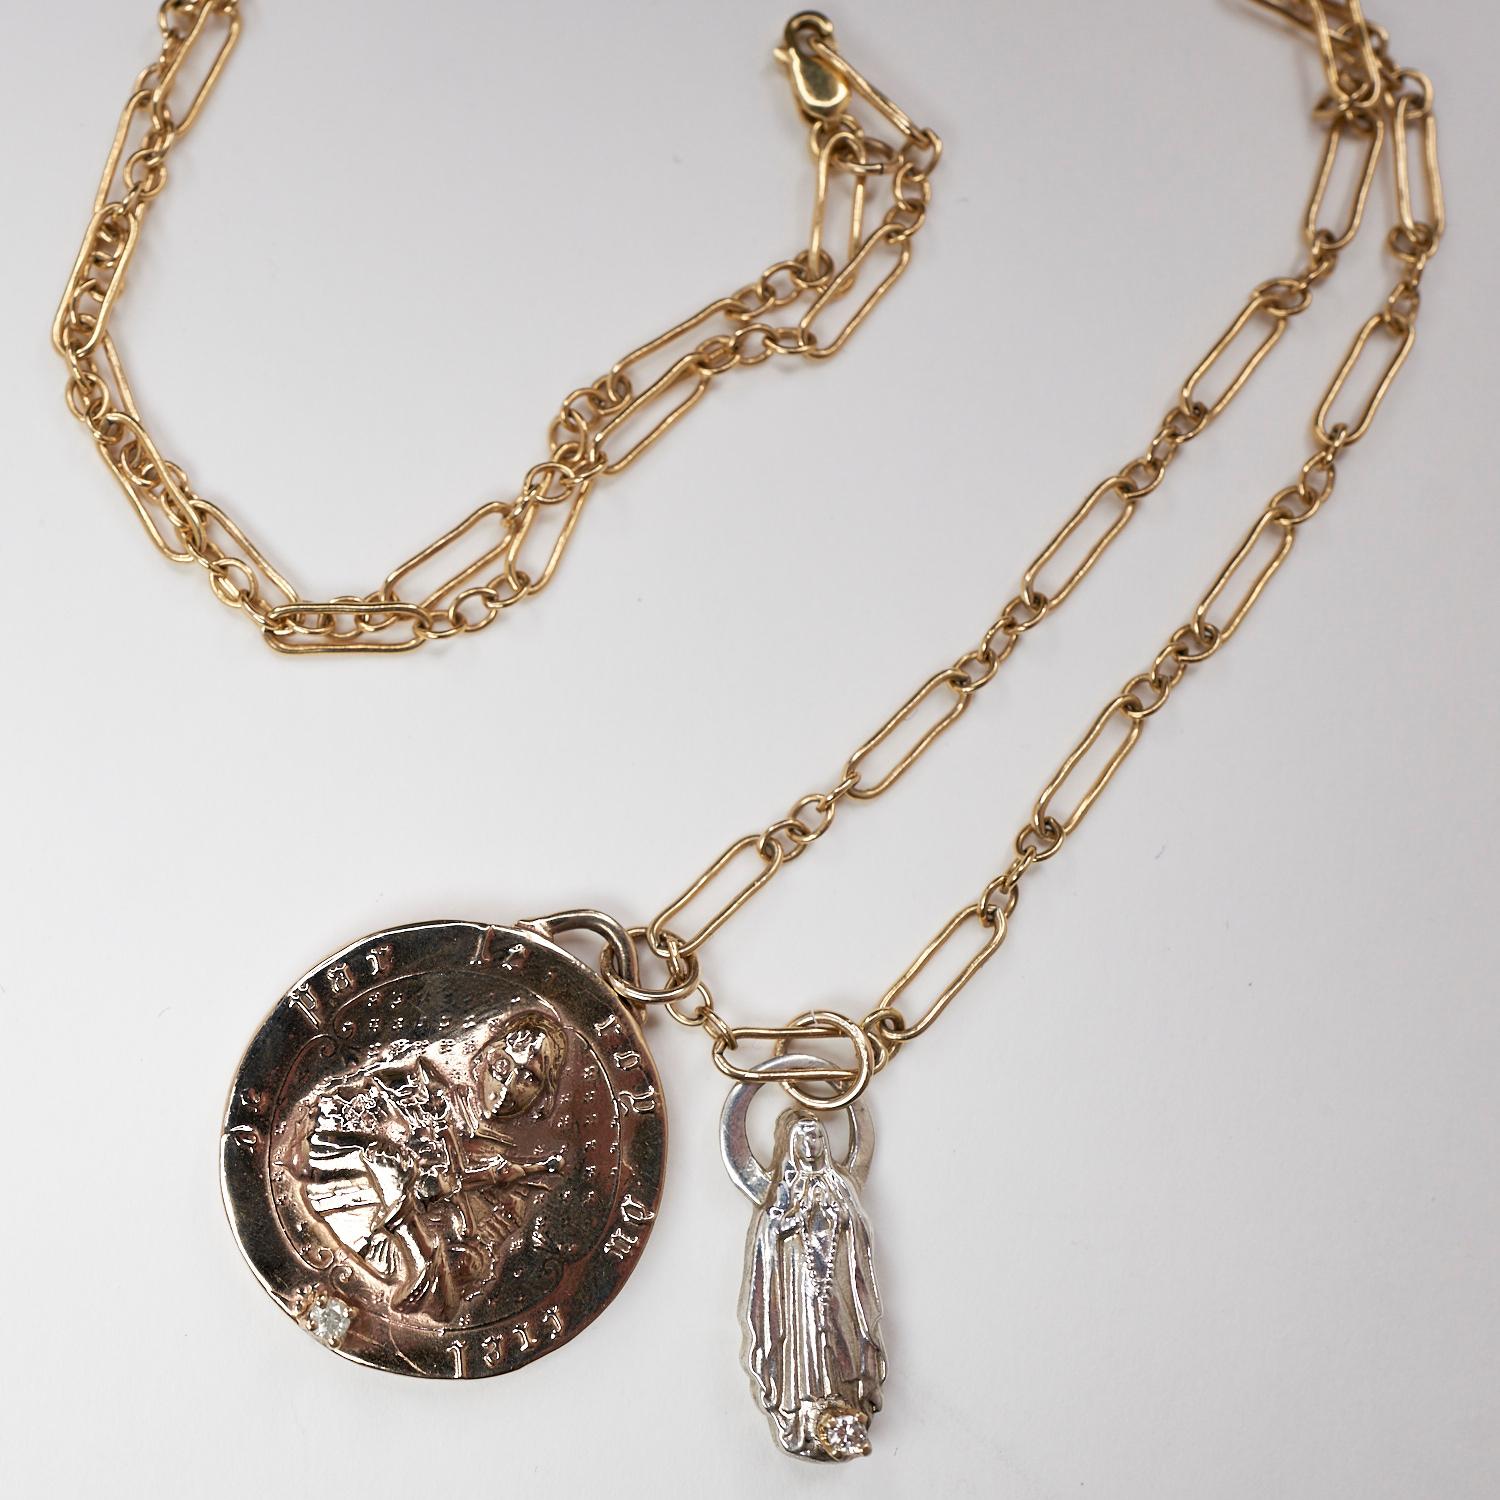 wearing virgin mary pendant